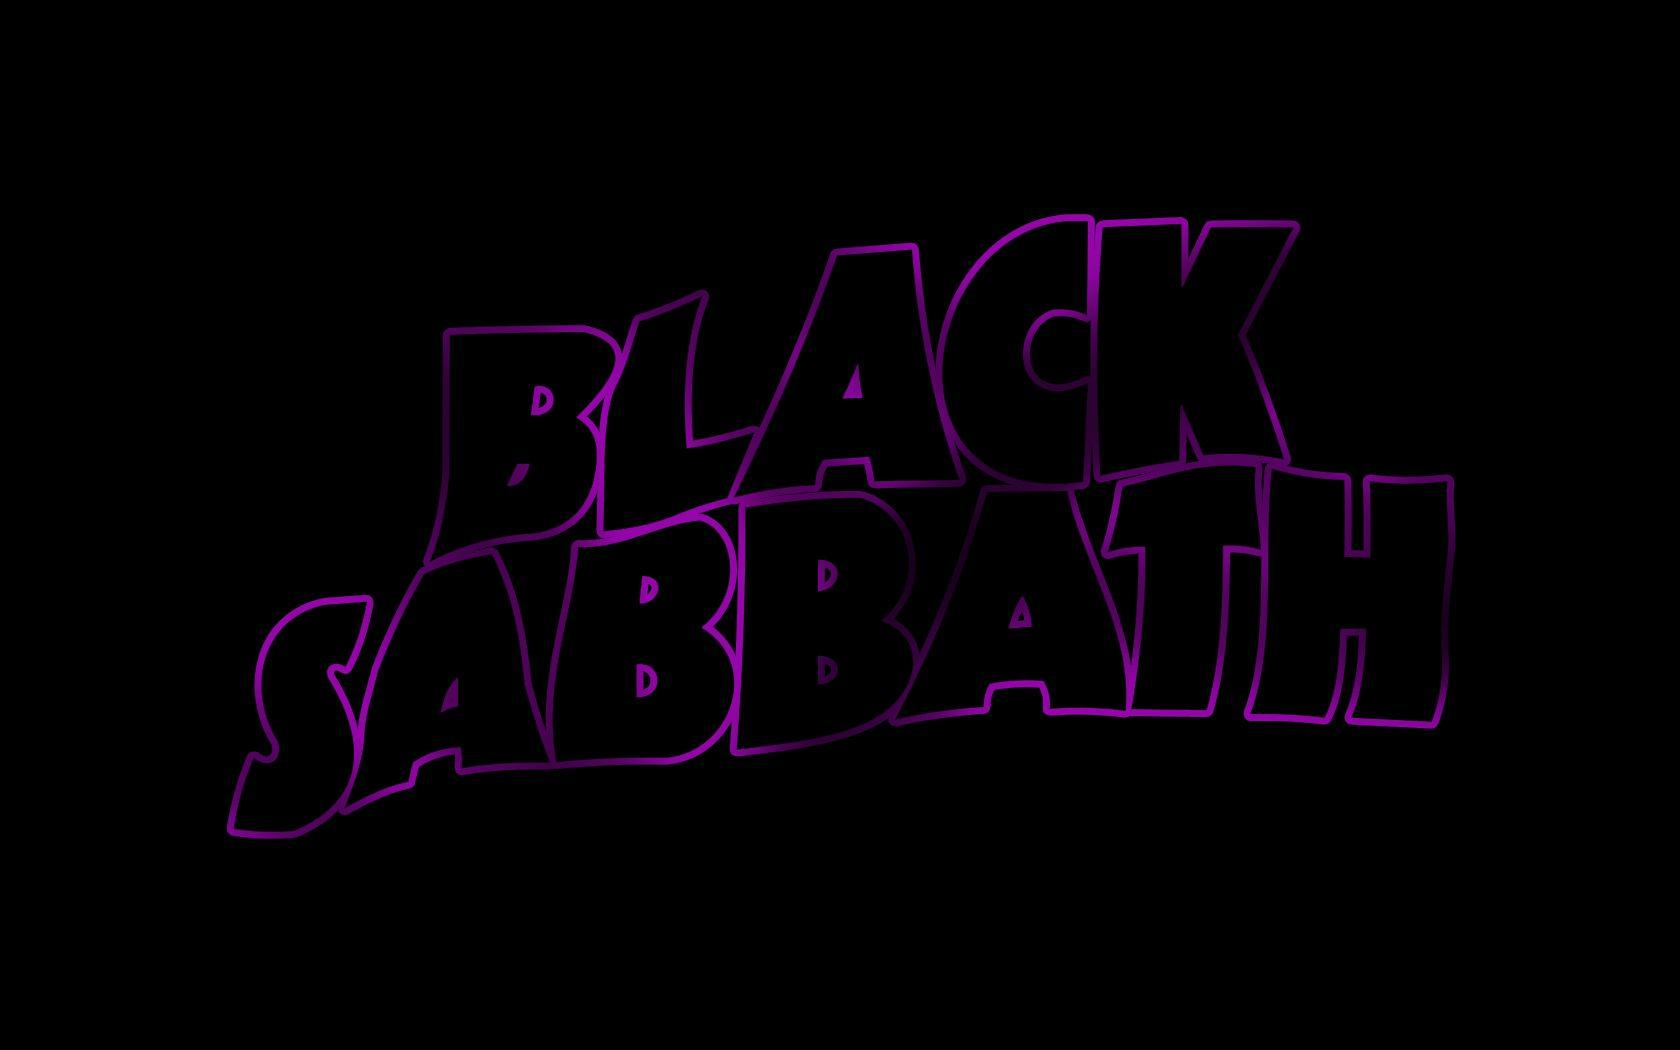 Black Sabbath - Black Sabbath Wallpaper (42650124) - Fanpop